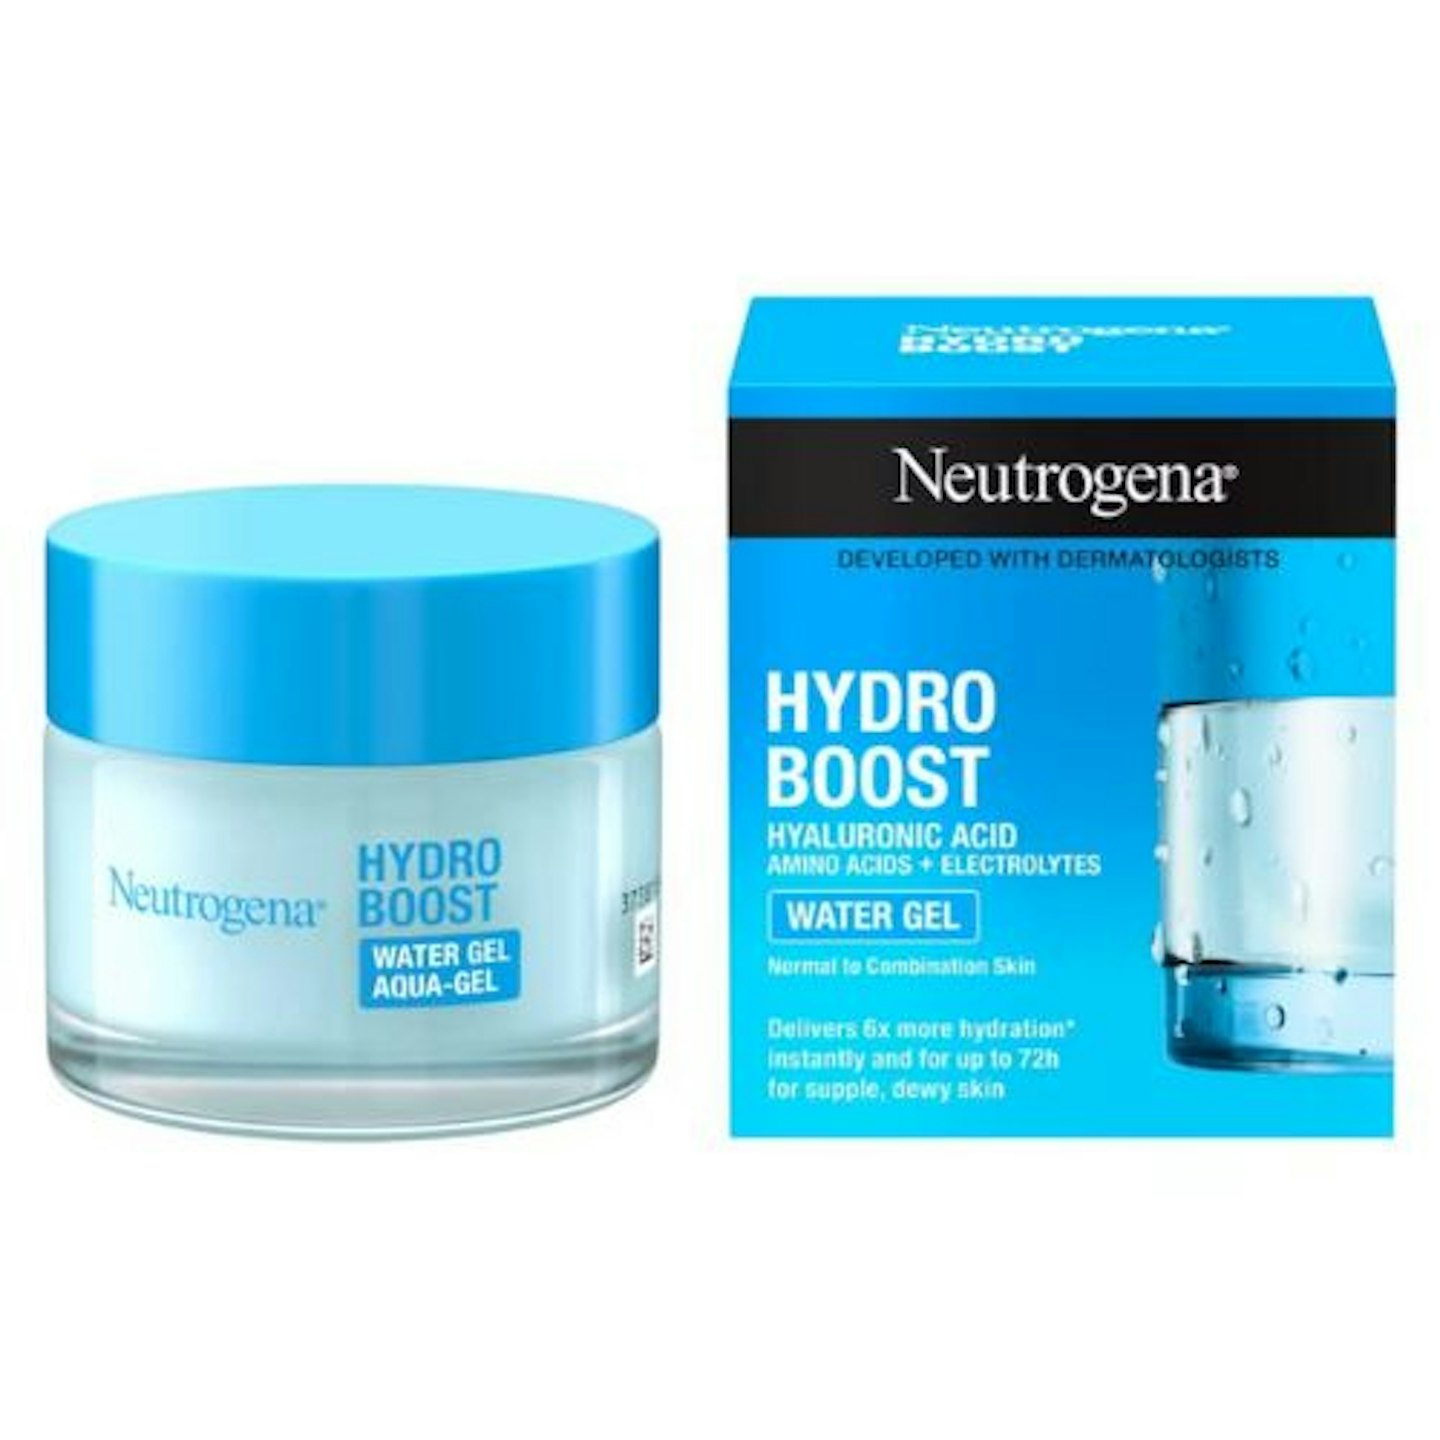 Neutrogena Hydro Boost Water Gel Moisturiser for Normal to Combination Skin